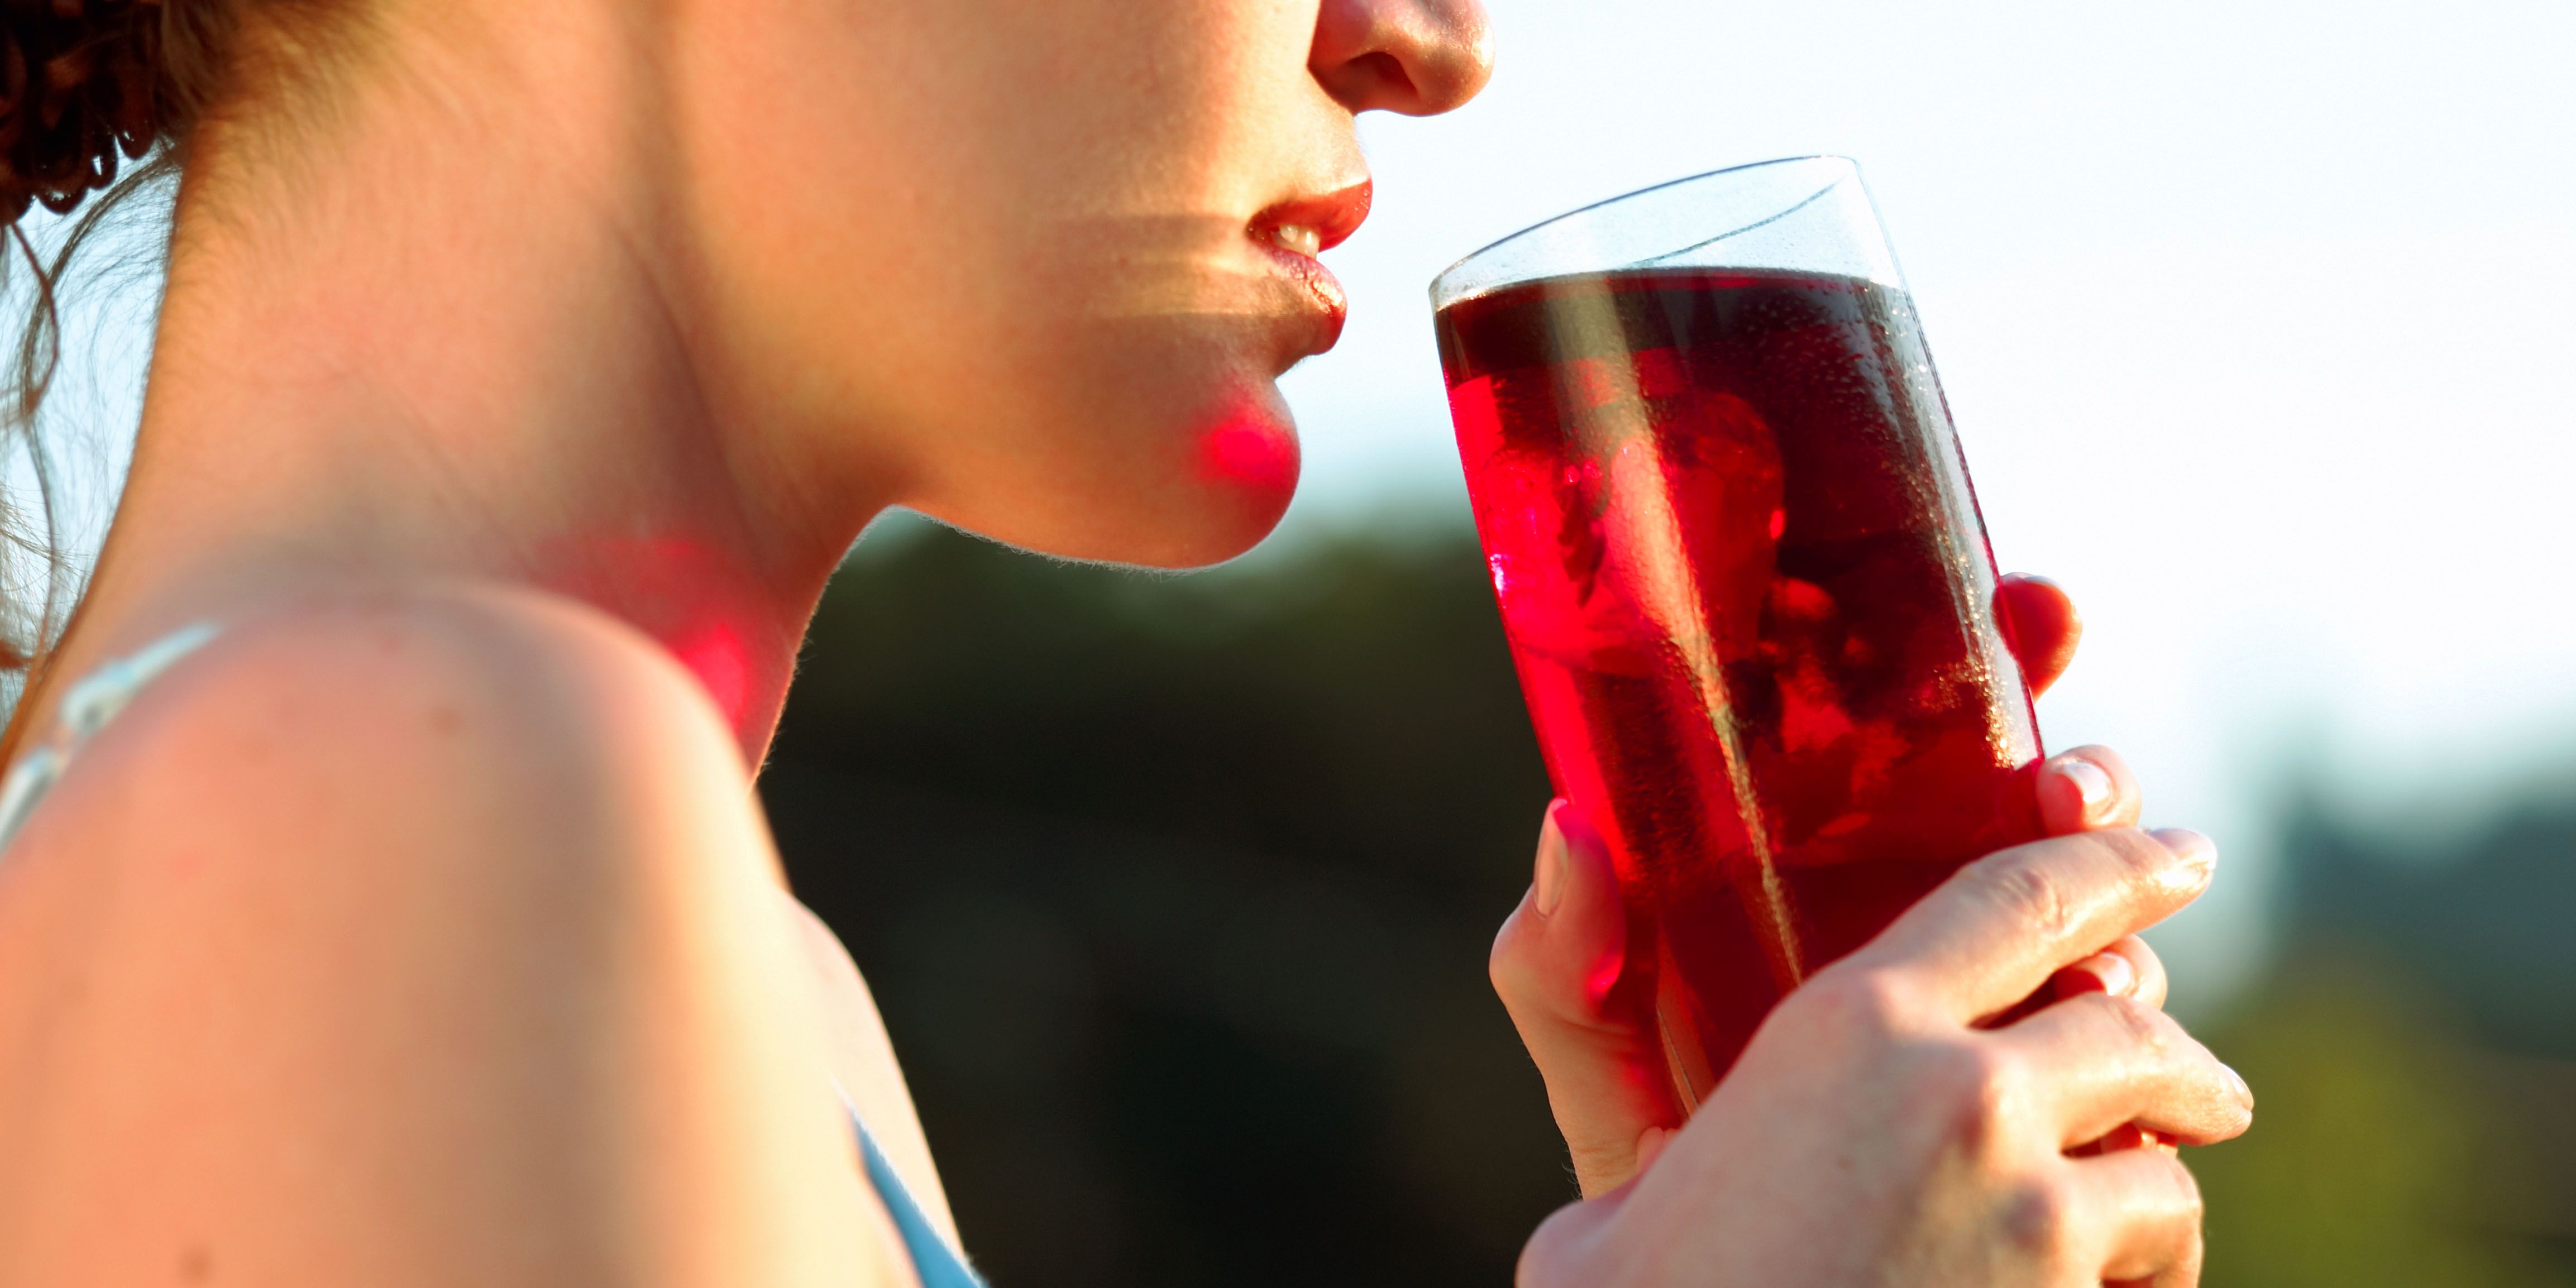 does cranberry juice help a uti?